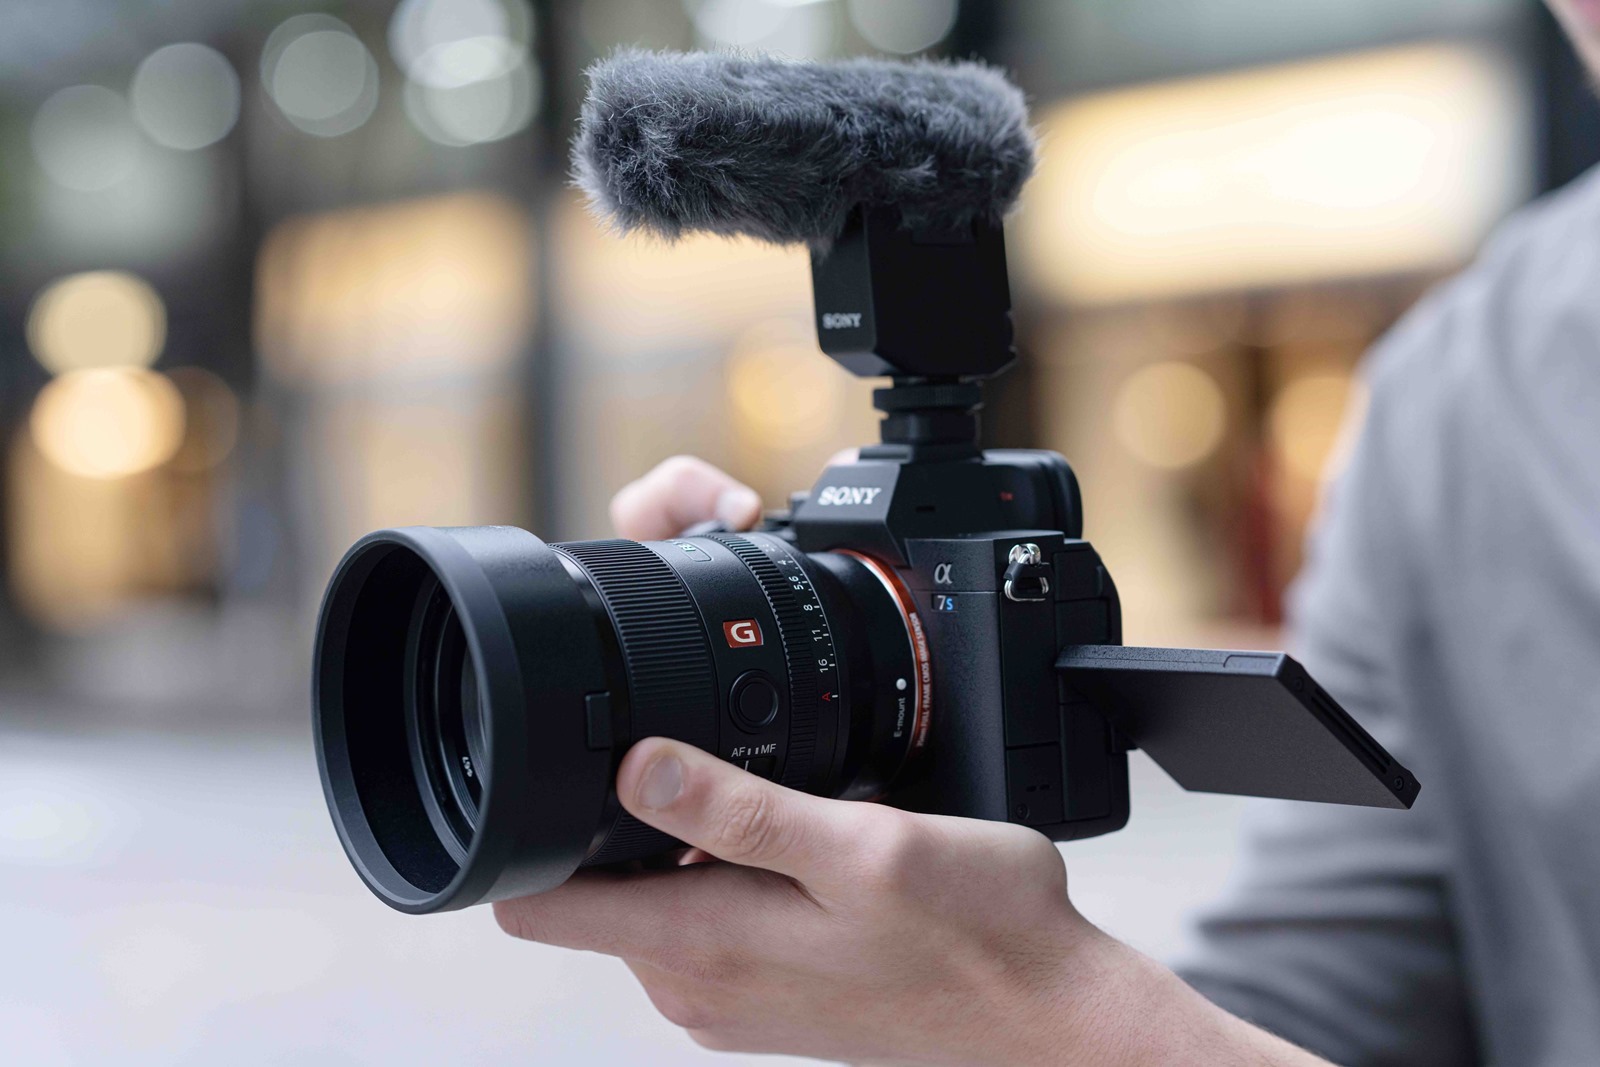 Sony FE 35mm F1.4 GM 大光圈廣角定焦鏡頭 兼具輕巧與極致畫質街拍神鏡 安靜高速對焦影片創作利器 @3C 達人廖阿輝